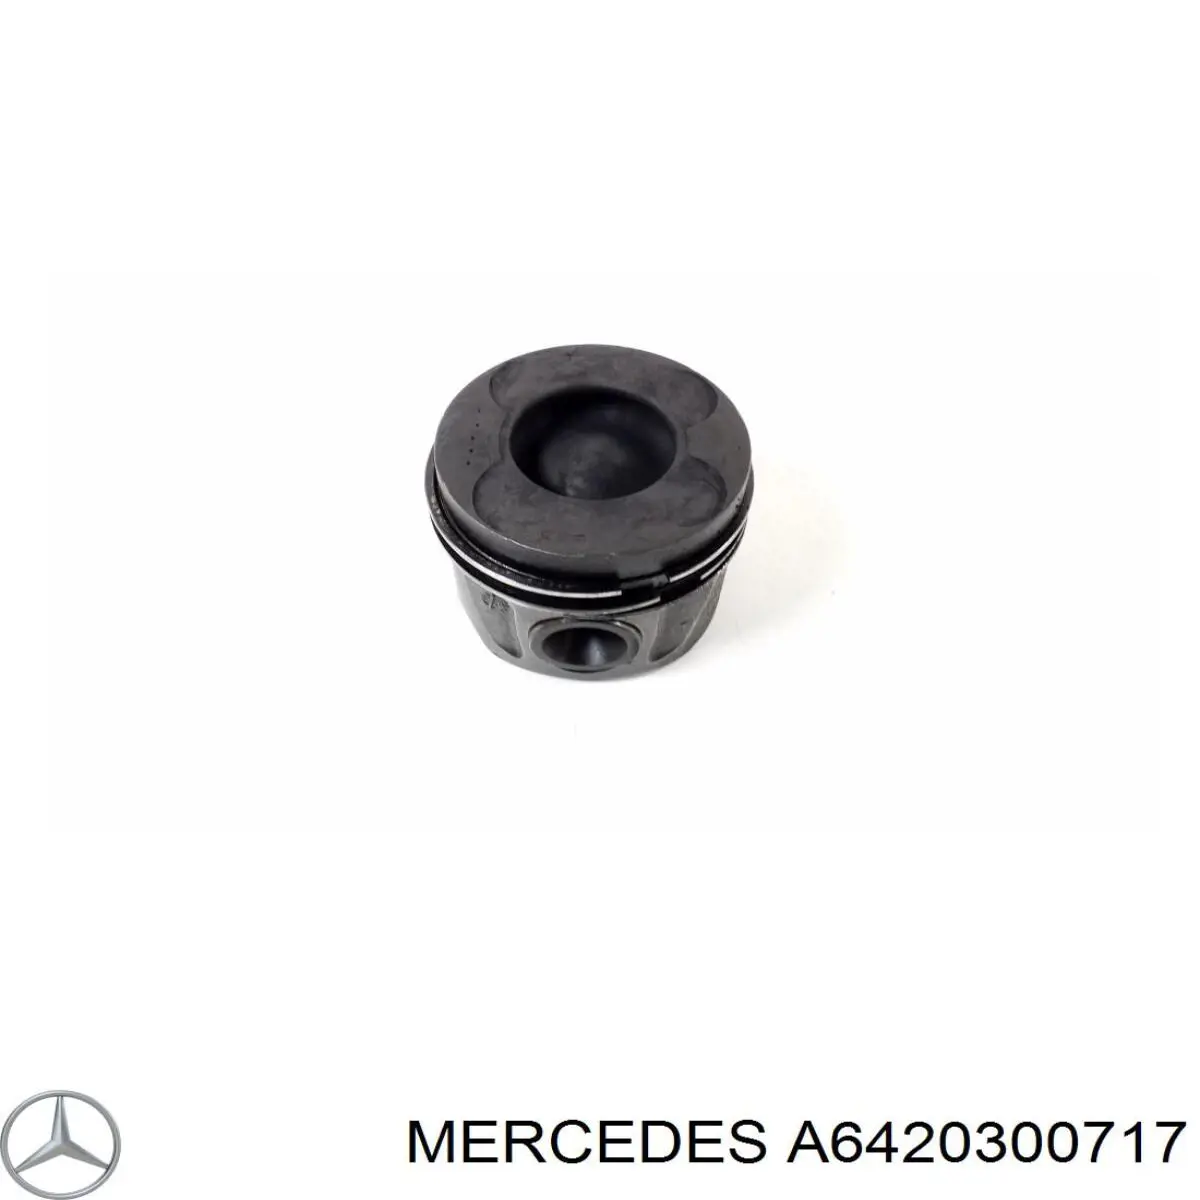 6420304617 Mercedes поршень в комплекте на 1 цилиндр, std